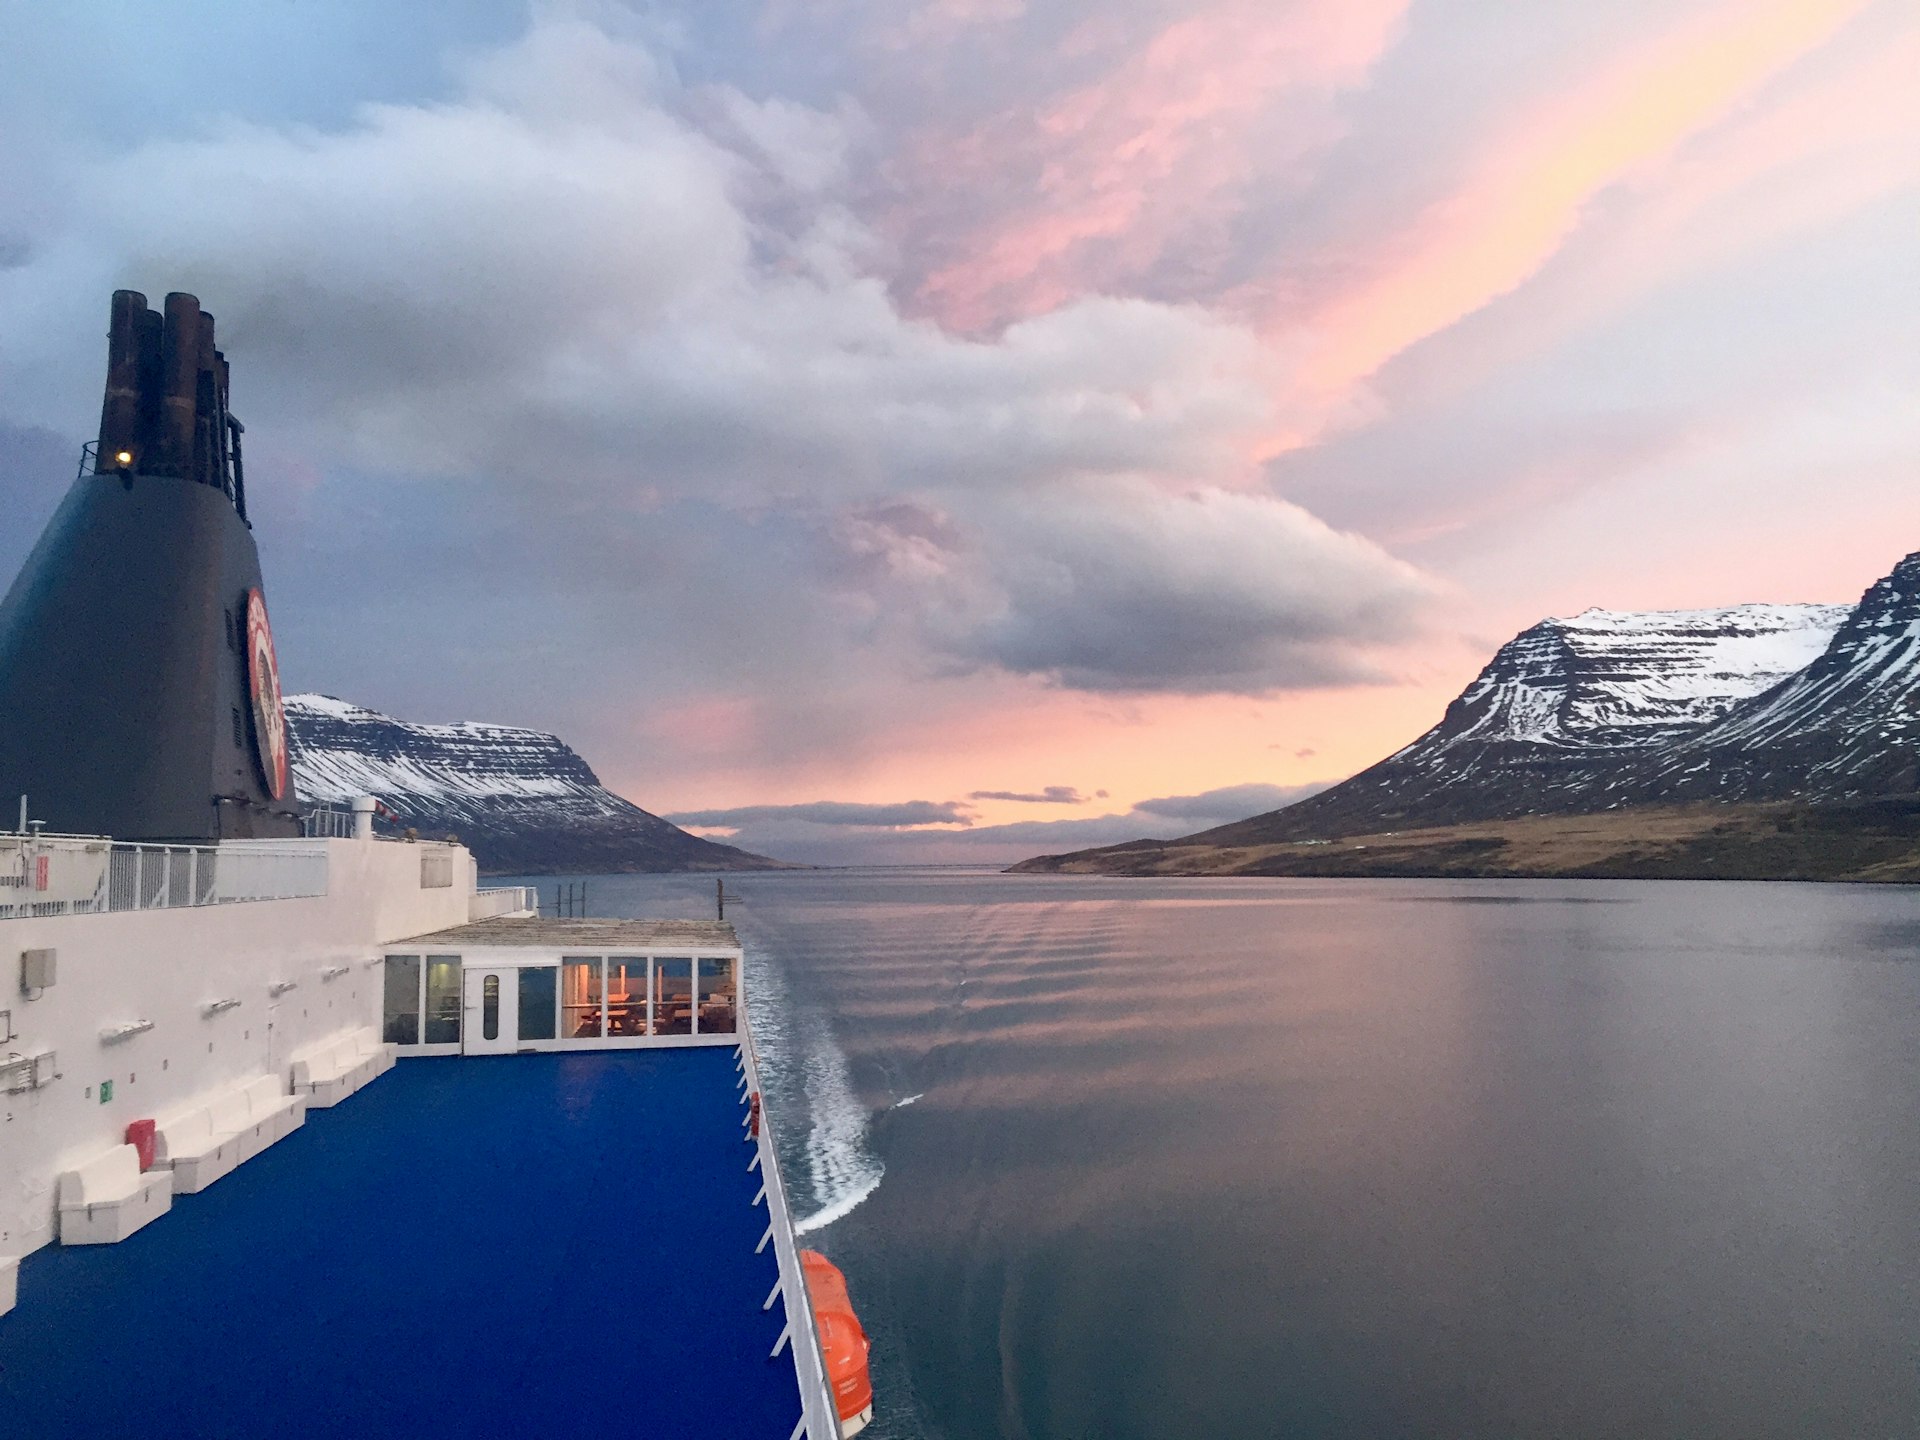 Views from the Norröna ferry deck as it sails into Seyðisfjörður